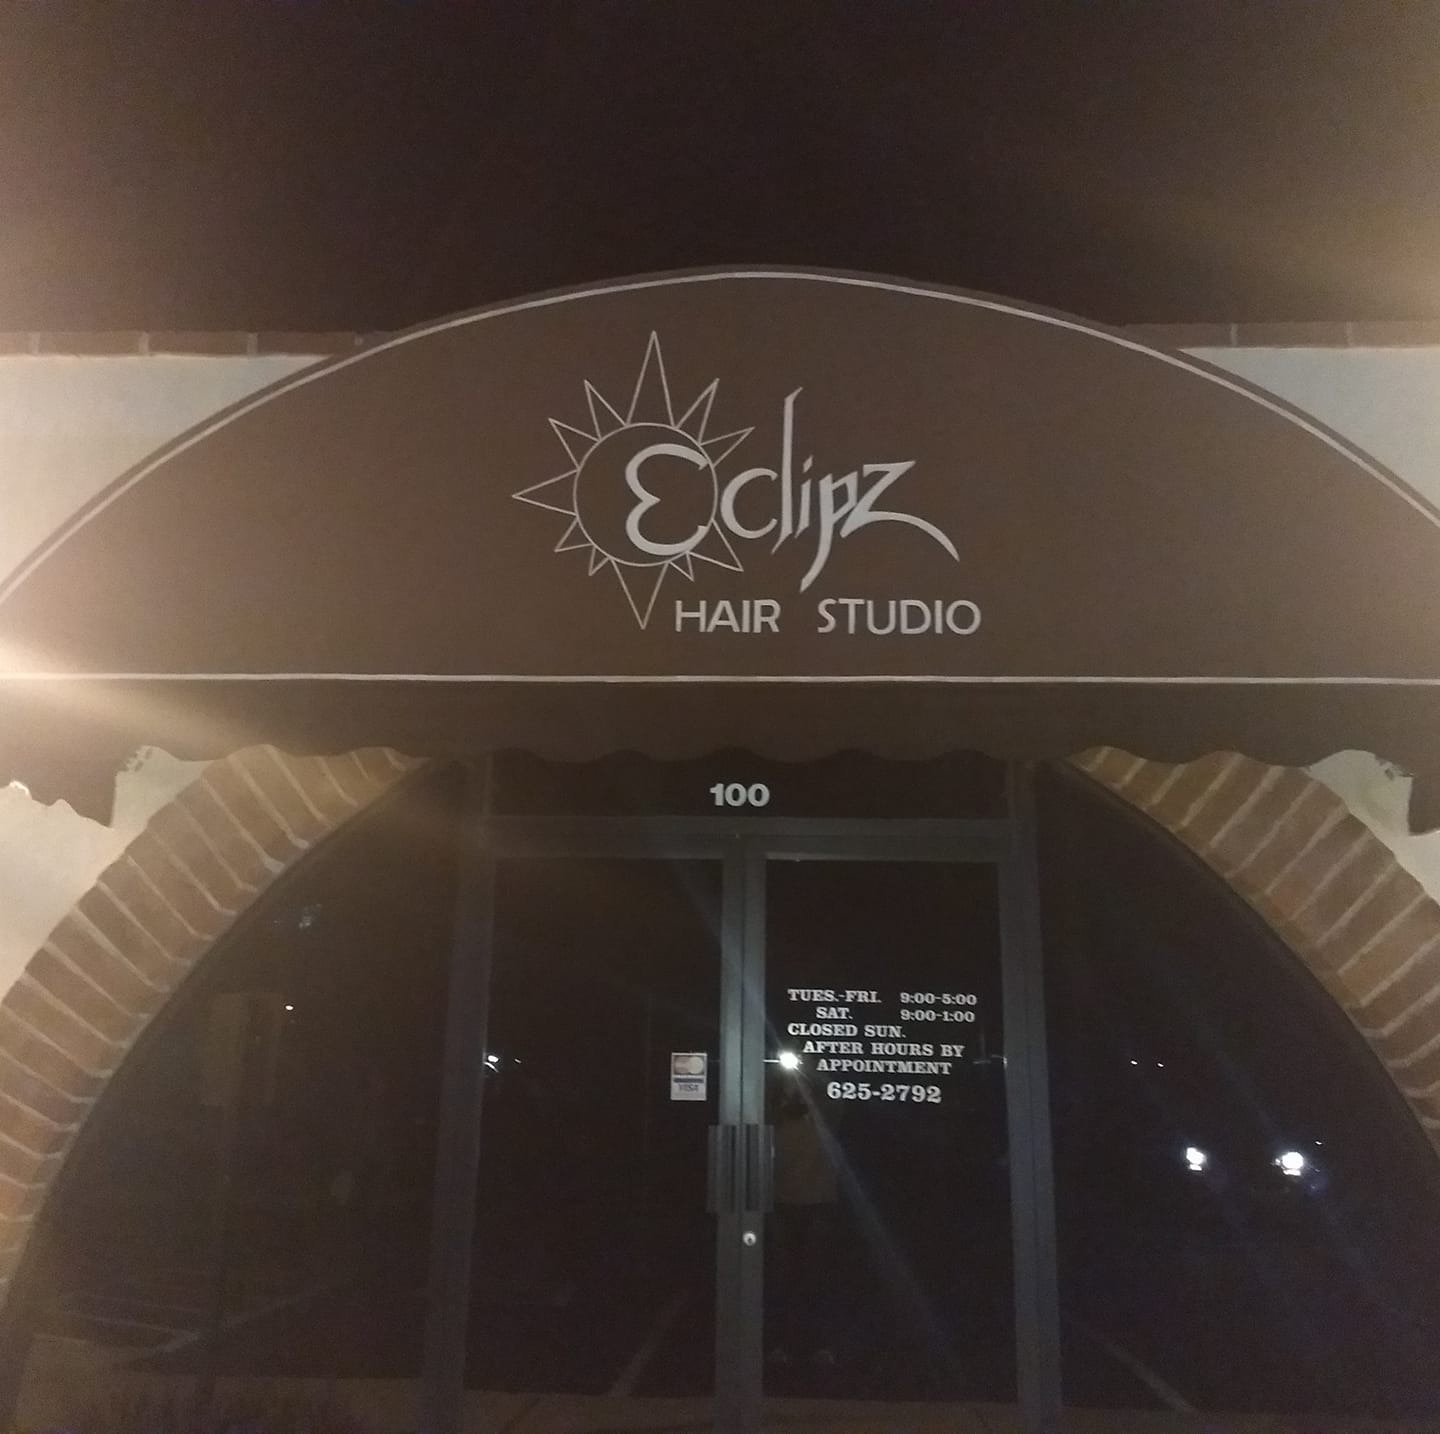 Eclipz Hair Studio